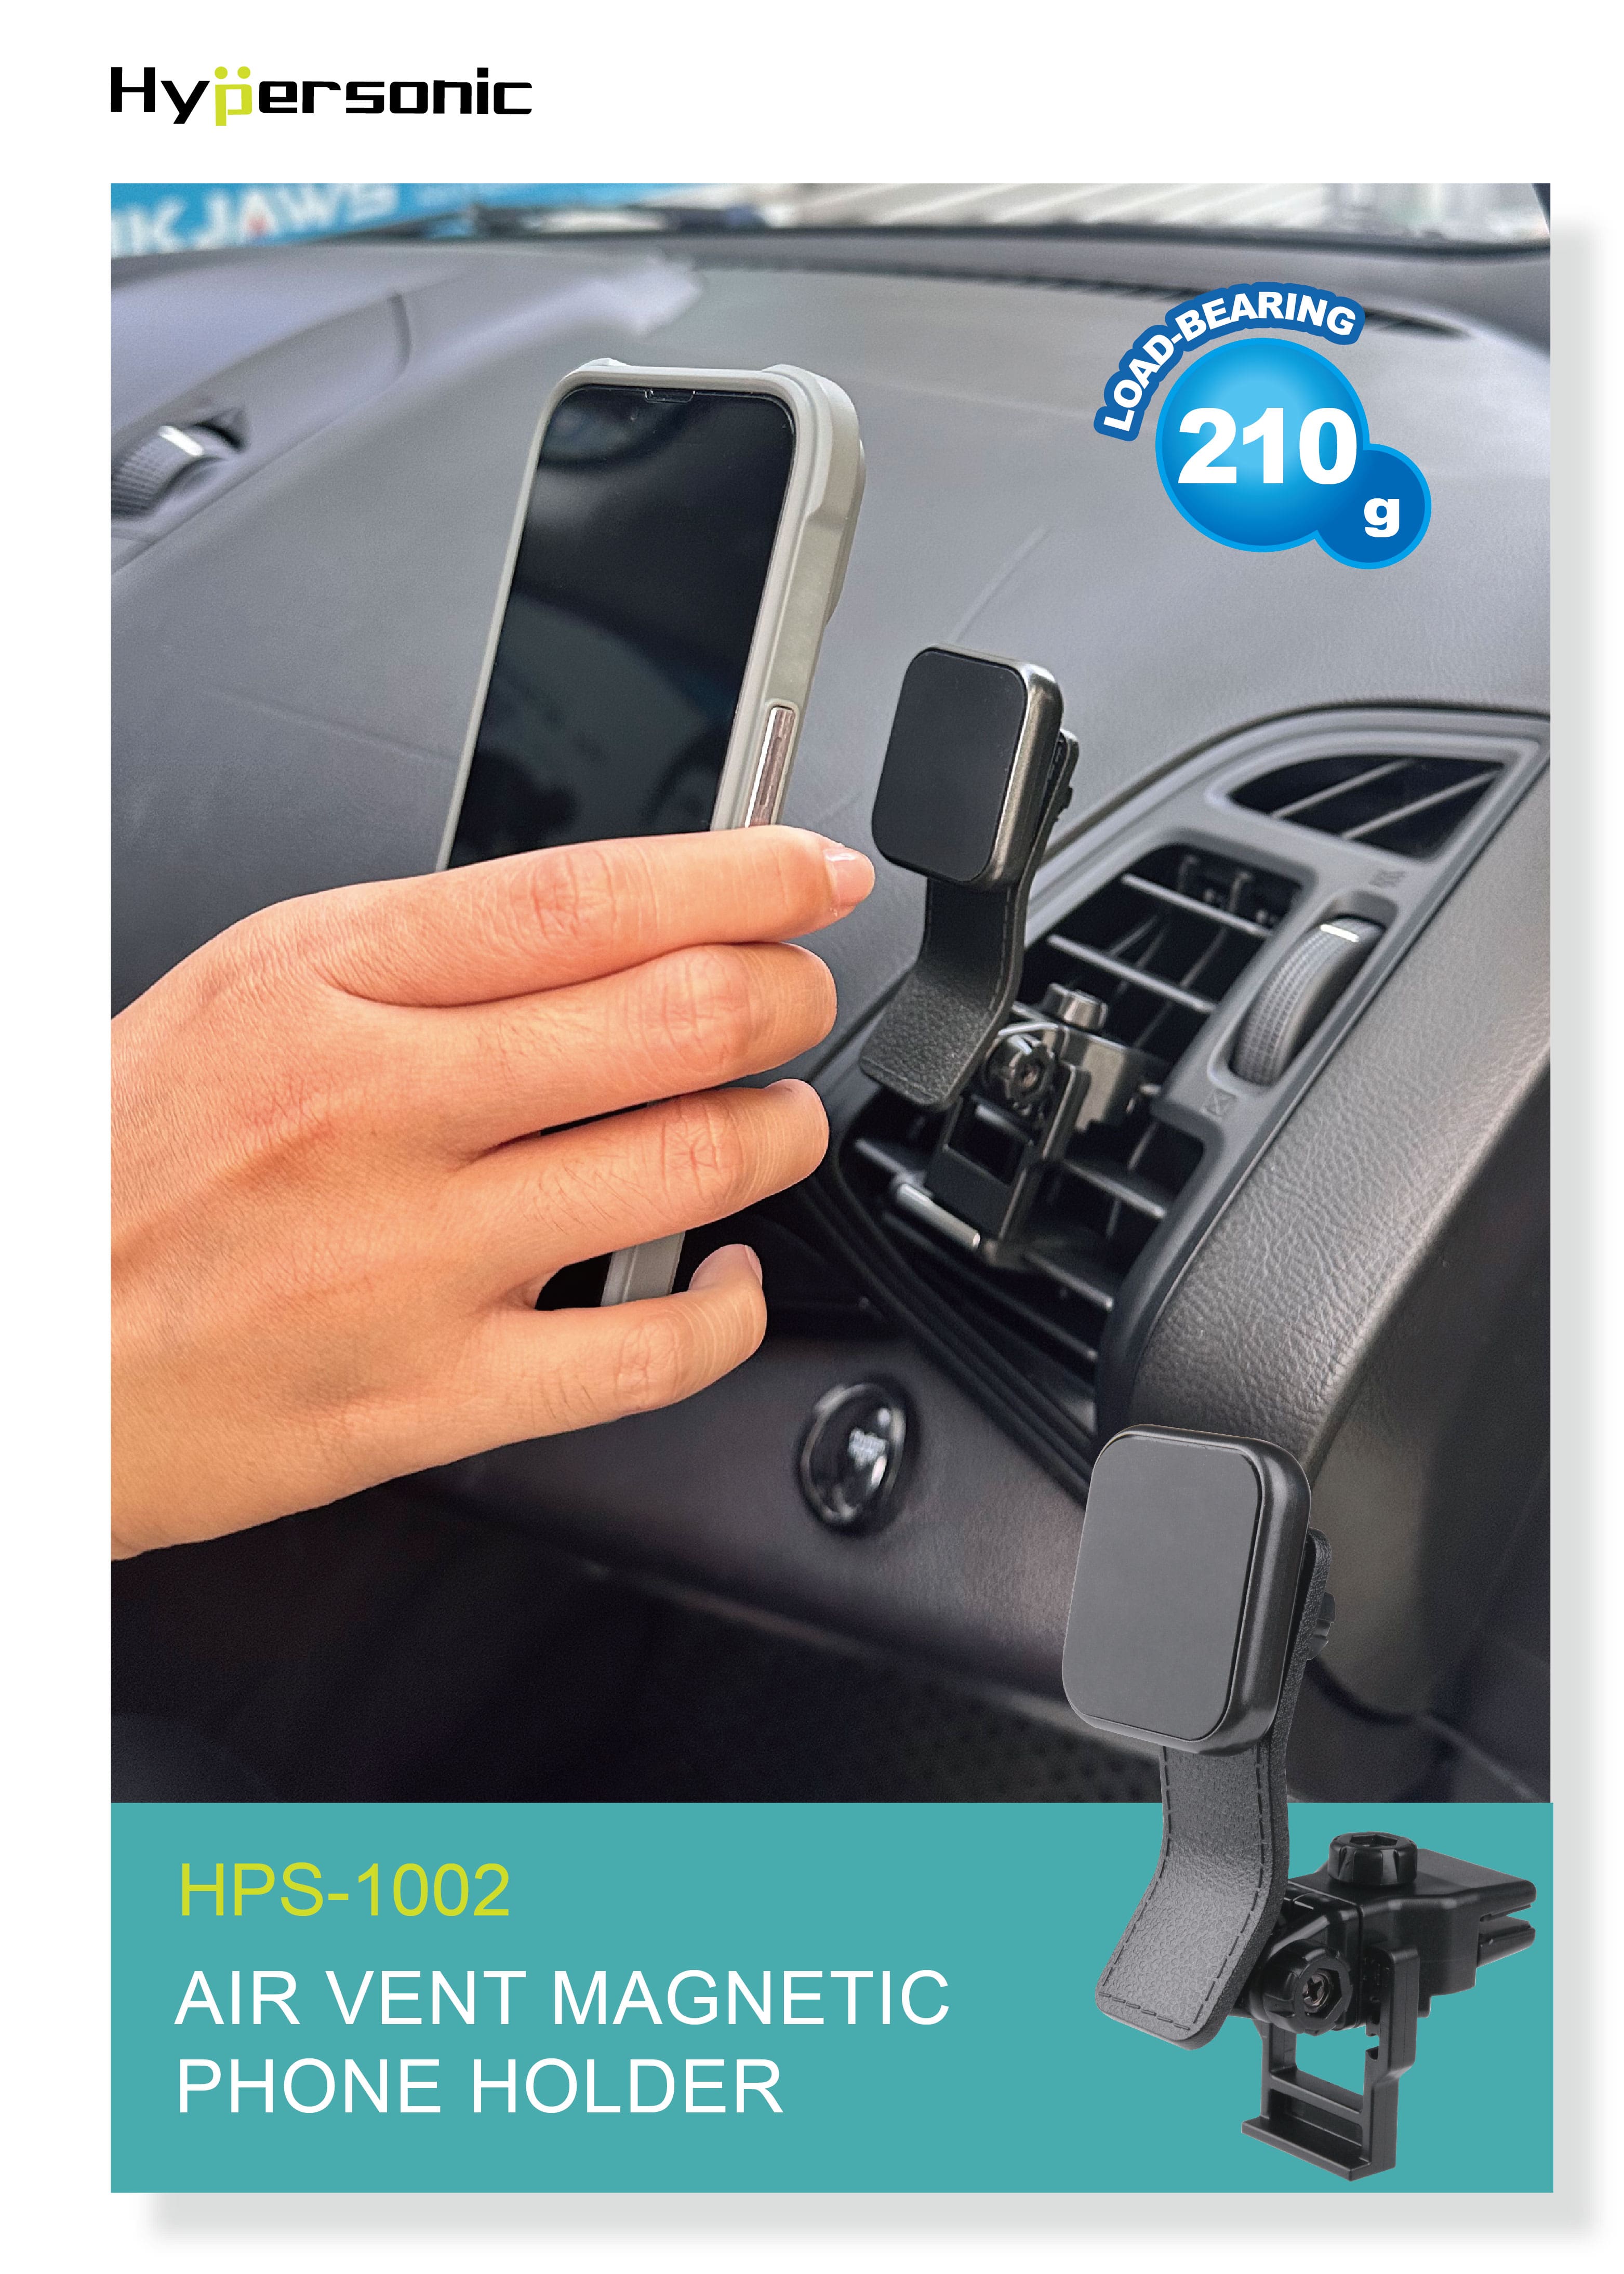 Air Vent Magnetic Phone Holder HPS-1002